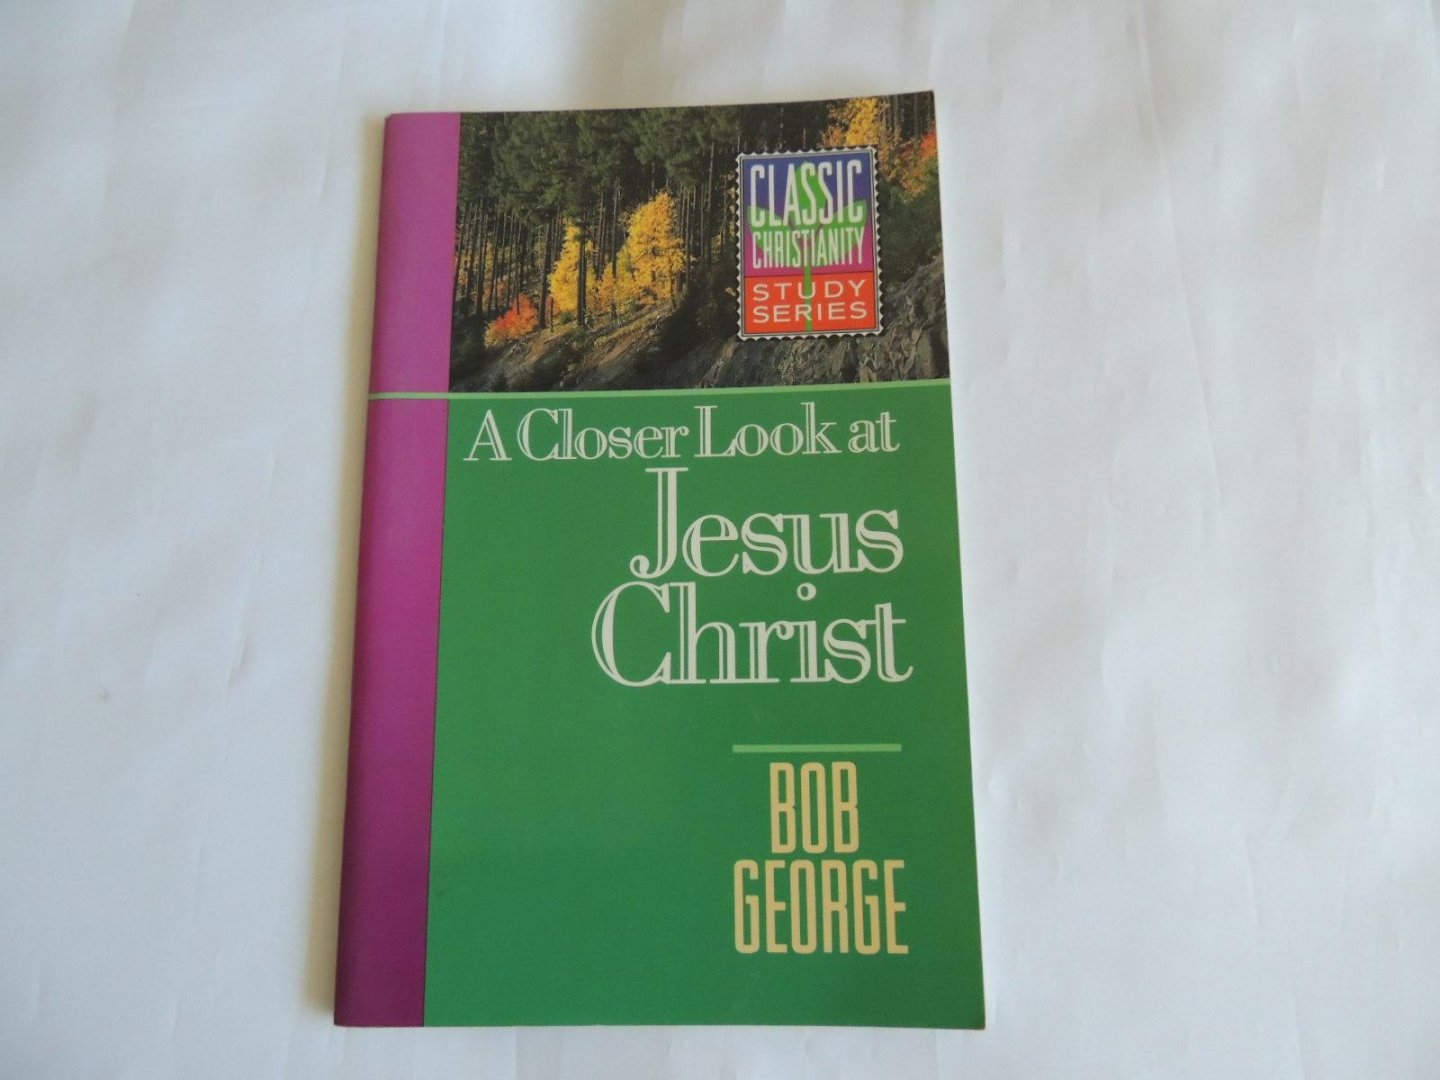 George Bob - a closer look at Jesus Christ